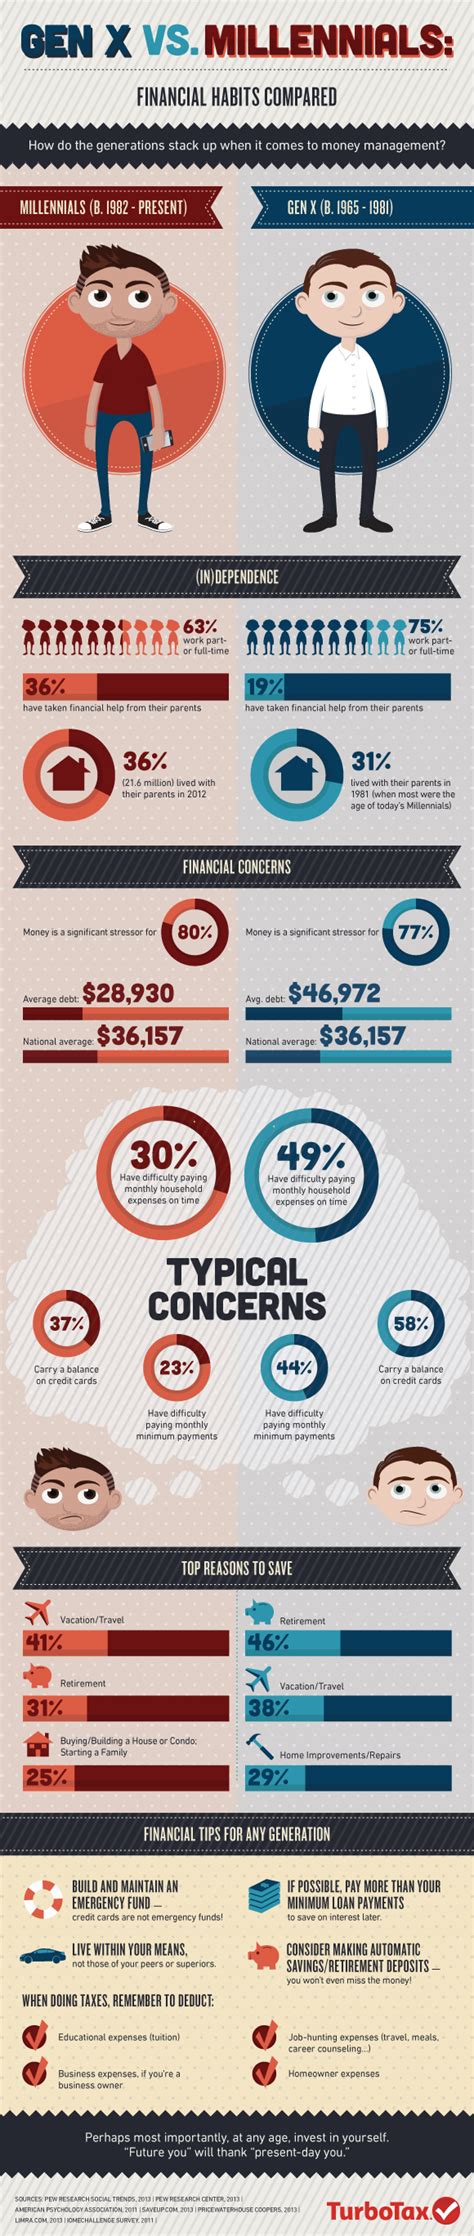 Gen X Vs Millennials Financial Habits Compared Infographic The Turbotax Blog